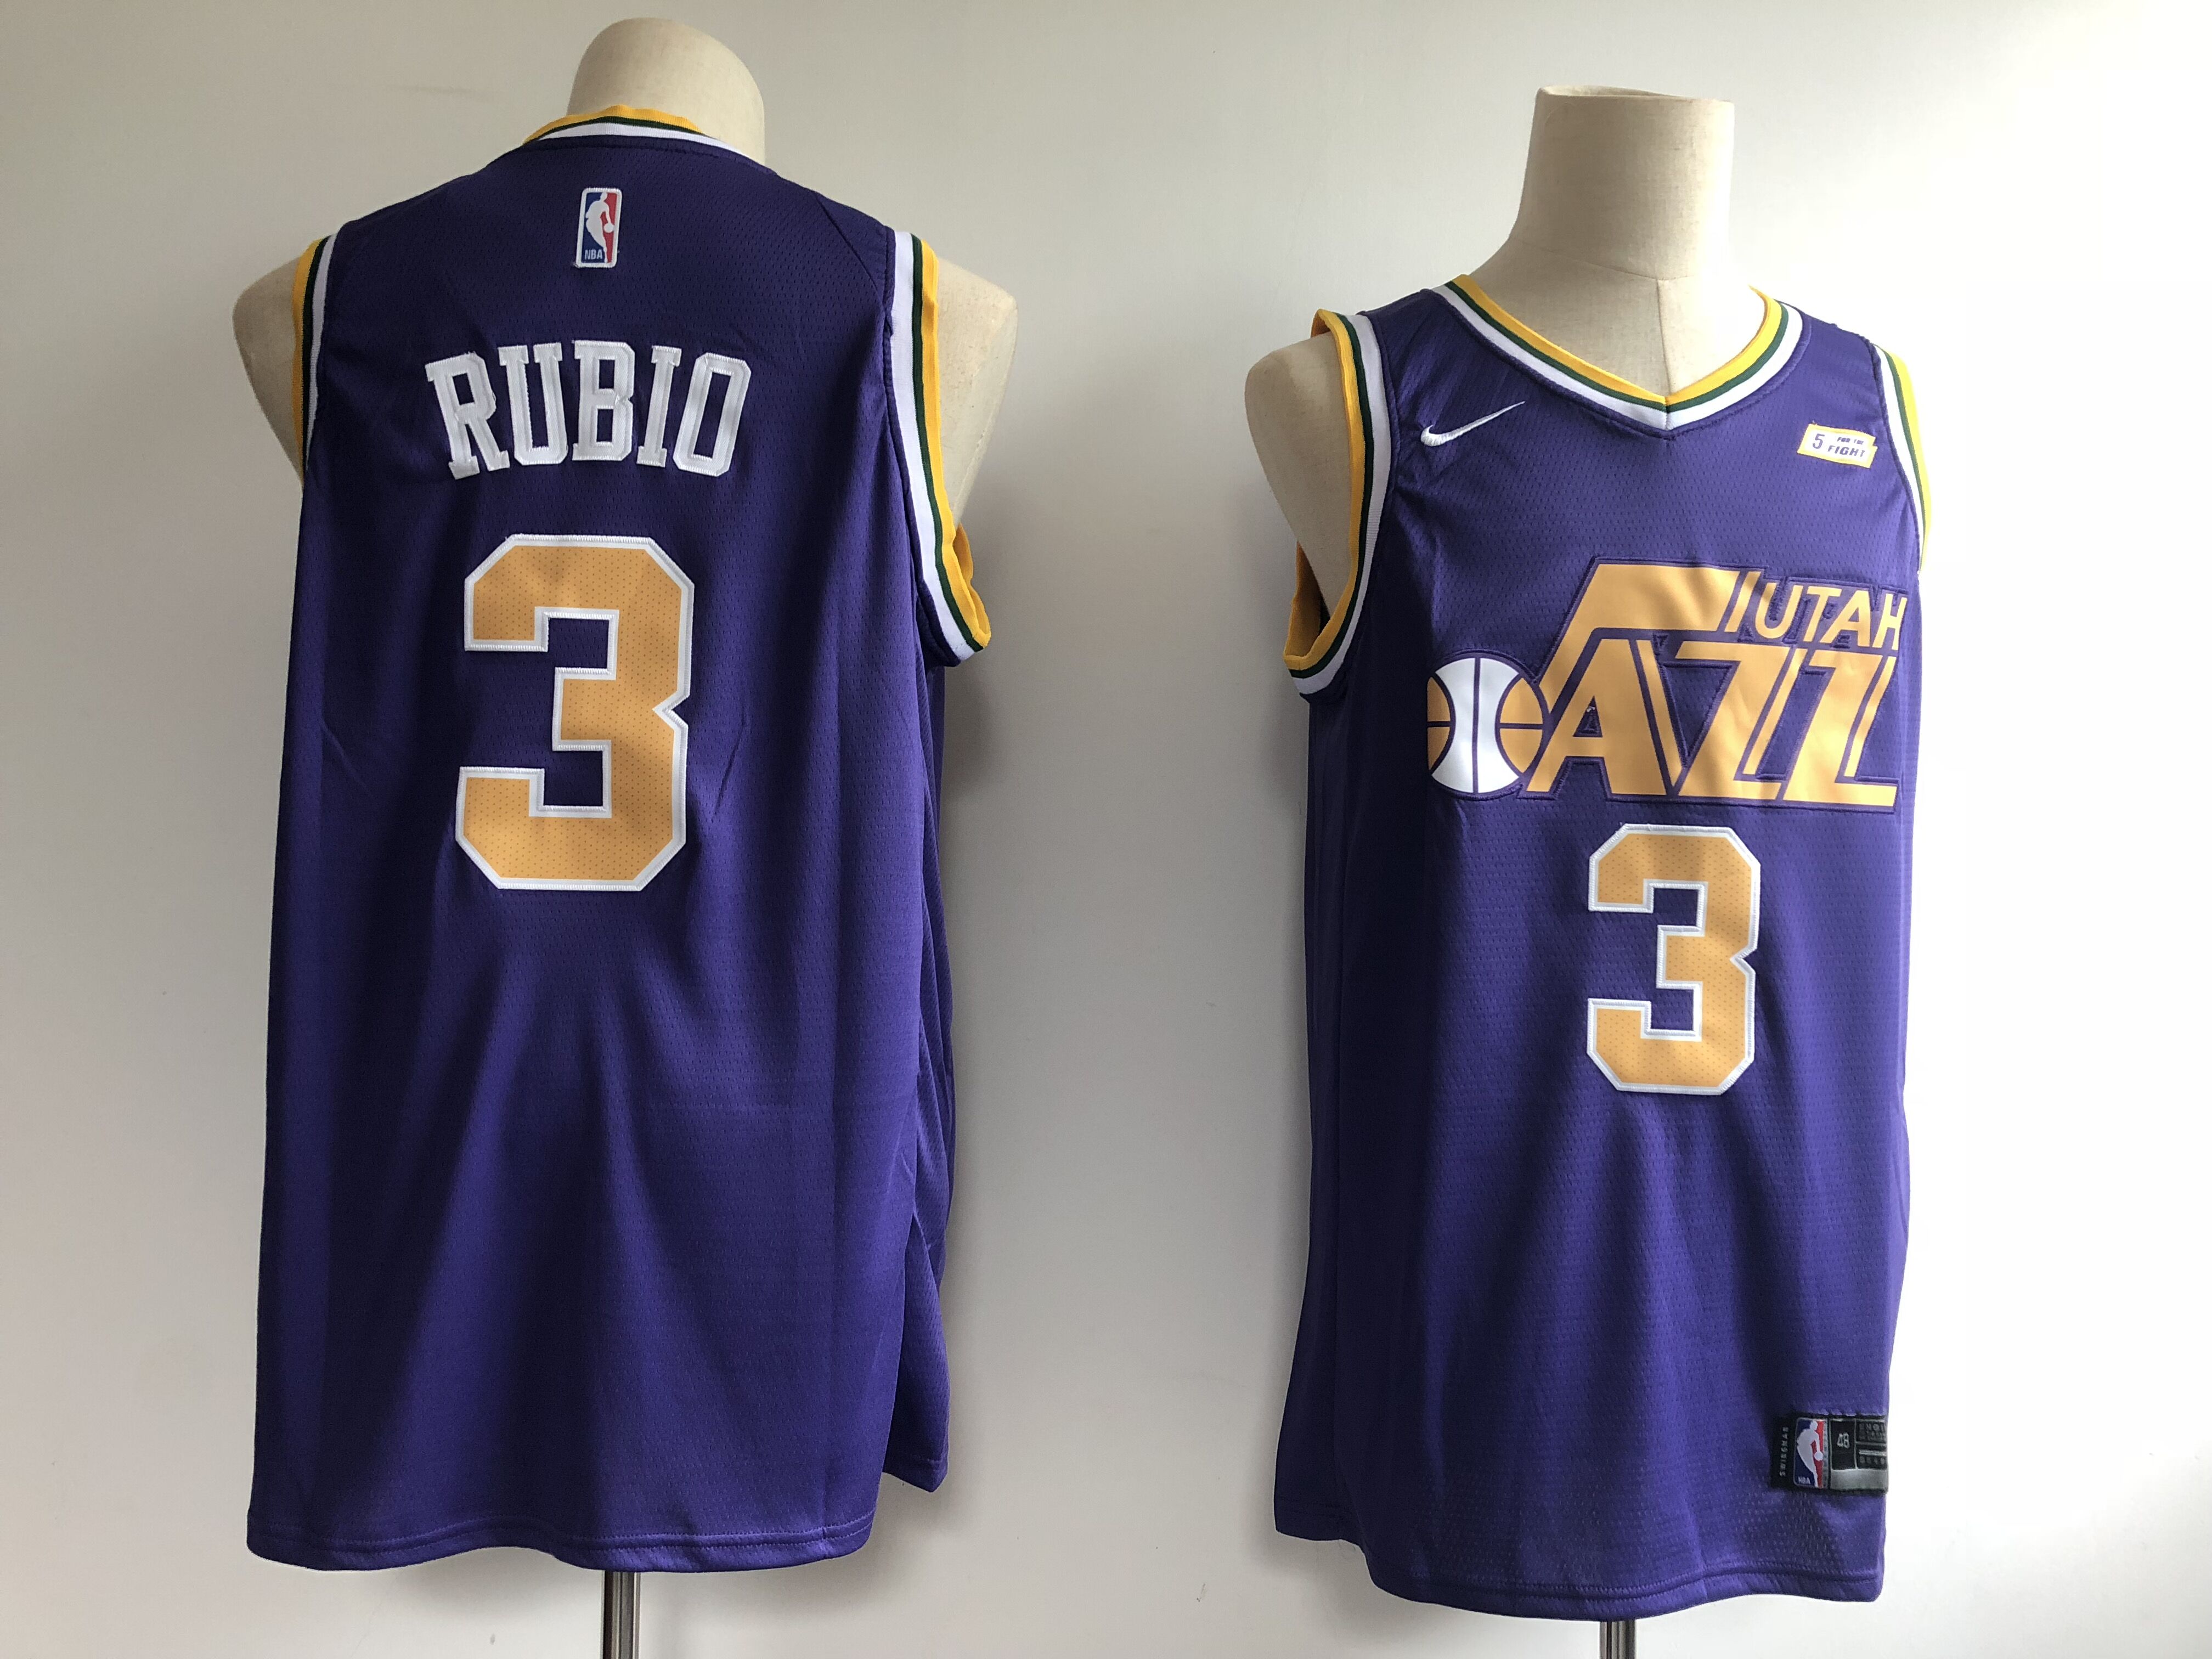 Men's Utah Jazz #3 Ricky Rubio Purple Swingman Stitched NBA Jersey